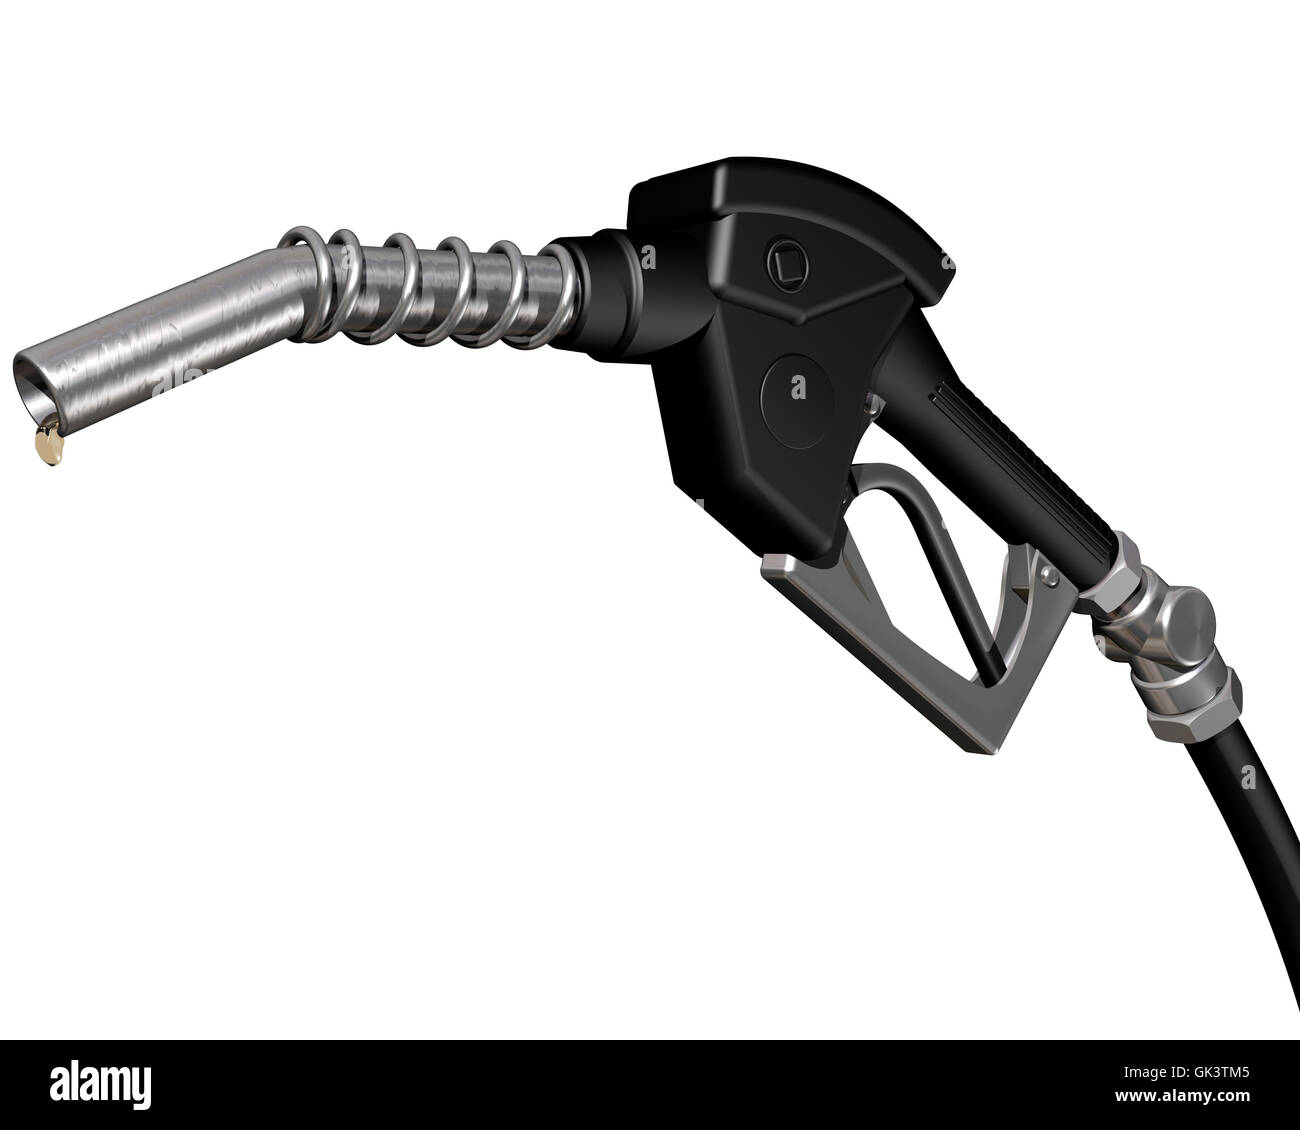 fuel nozzle with hose Zapfpistole mit Schlauch Stock Photo - Alamy